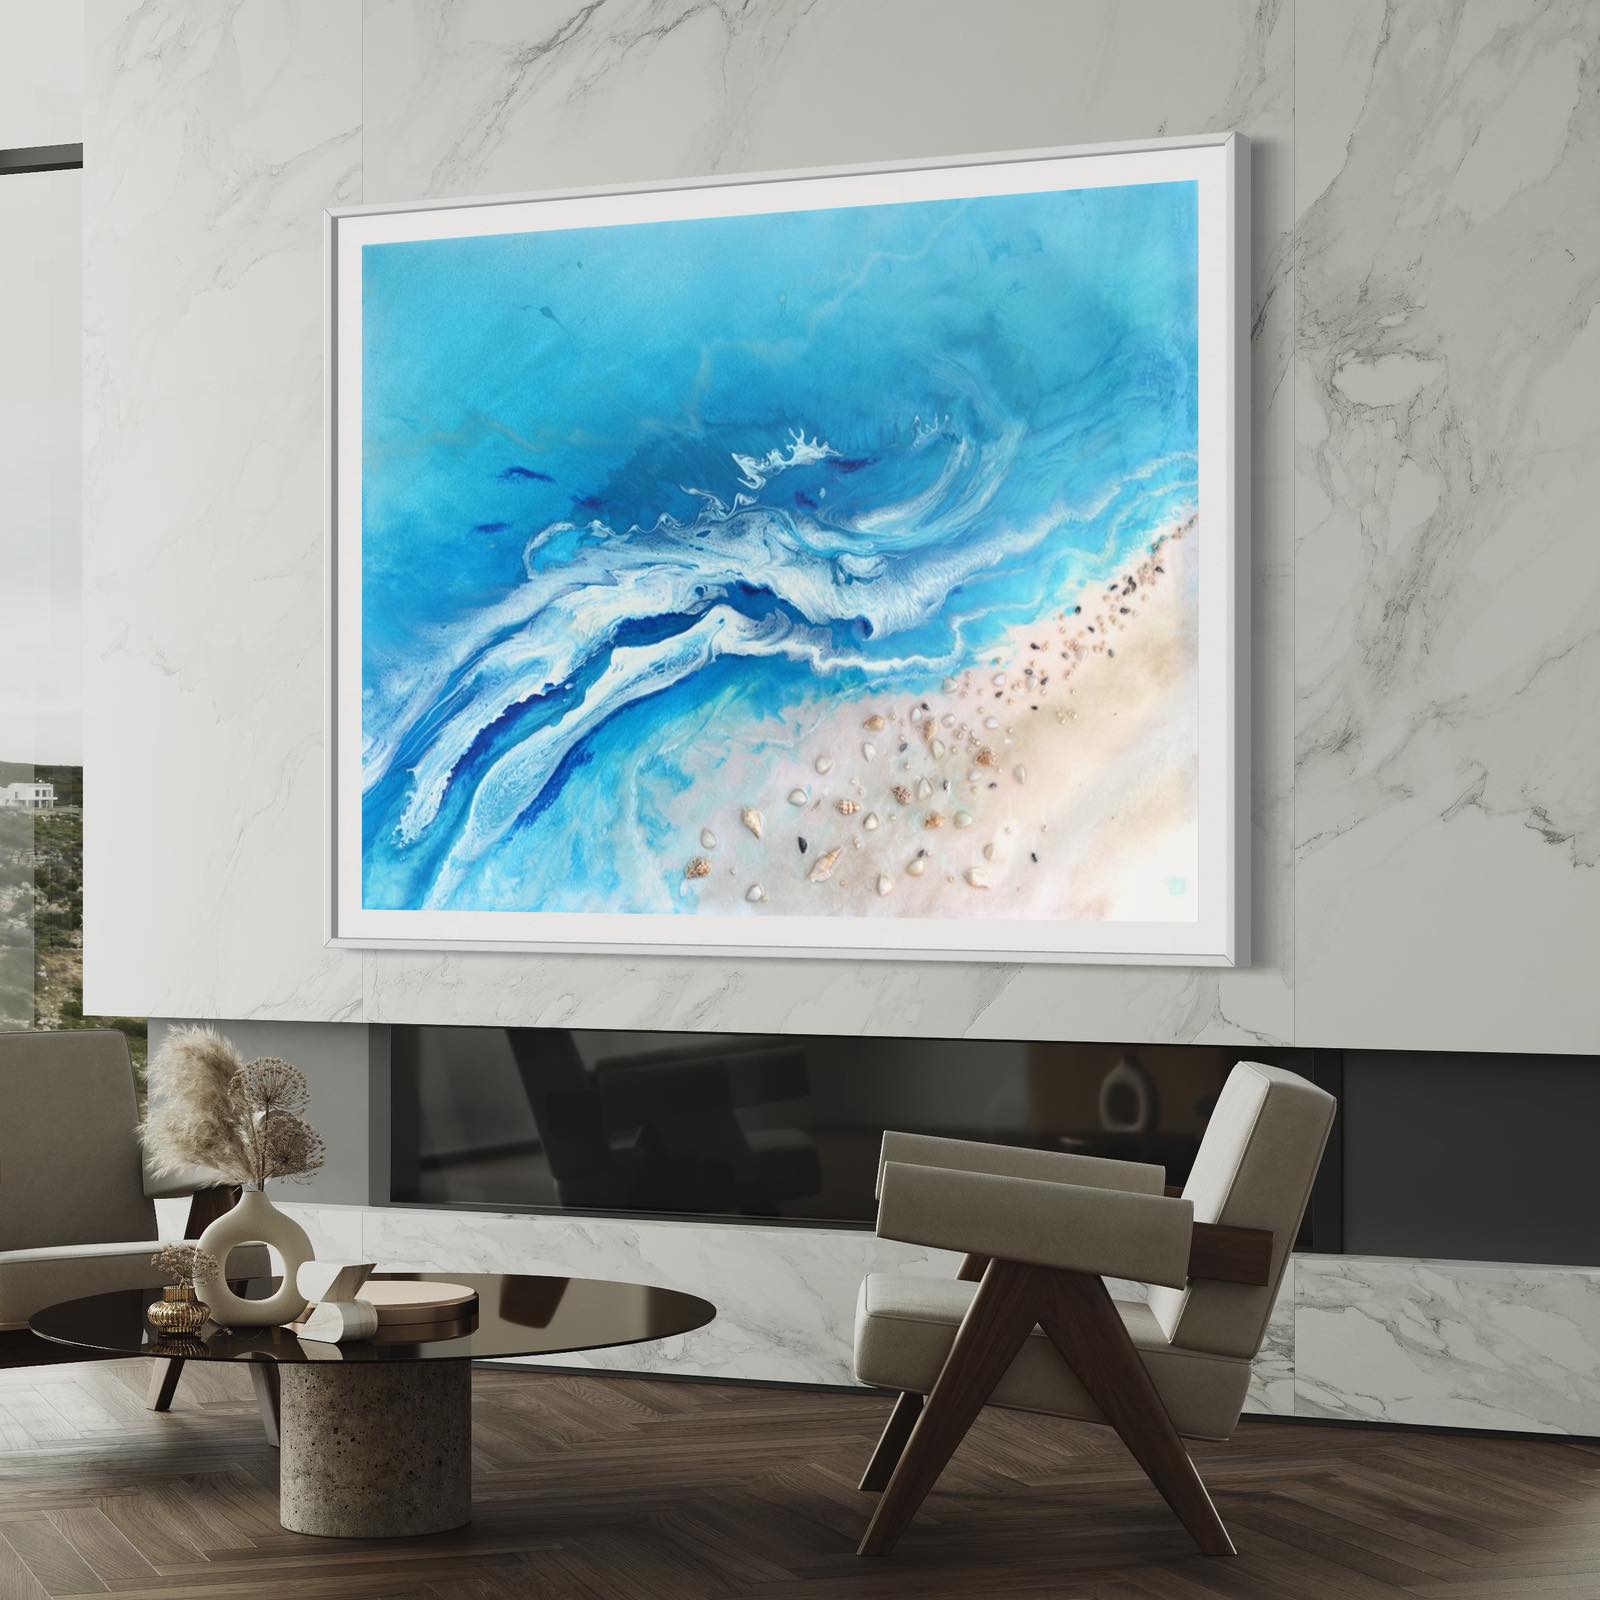 Bali Utopia Ocean Artwork. Limited Edition Print